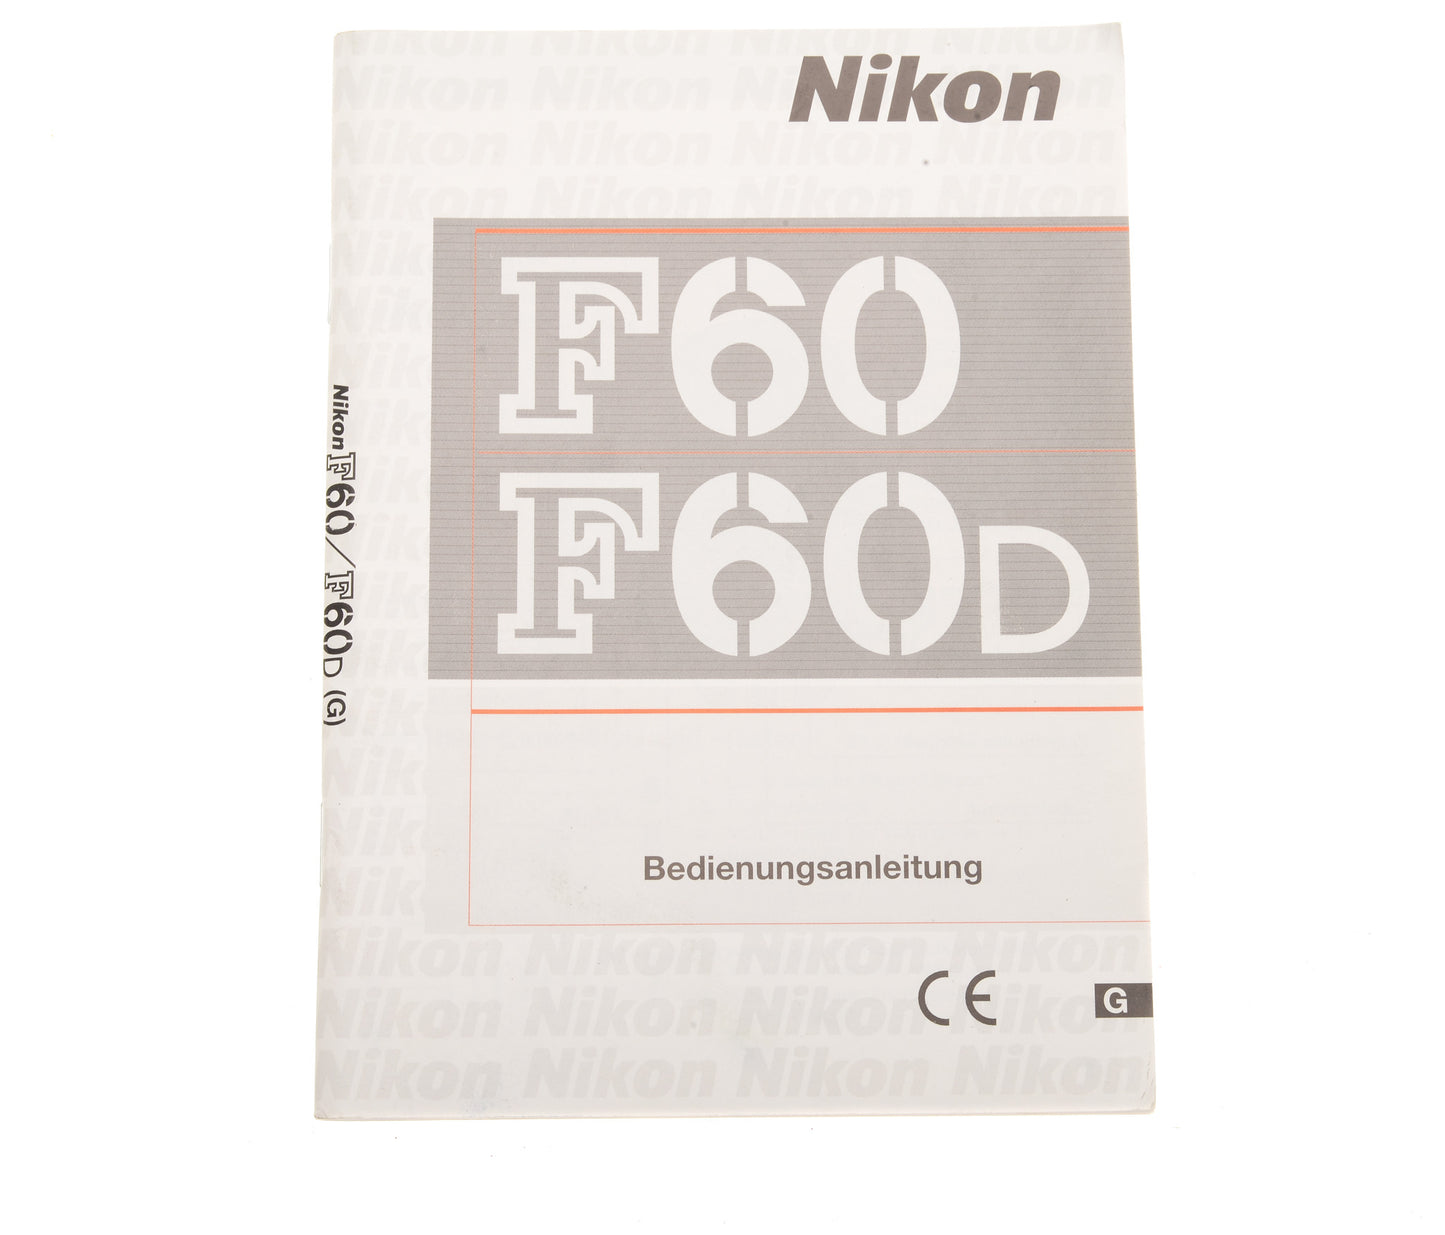 Nikon F60 / F60D Instructions - Accessory